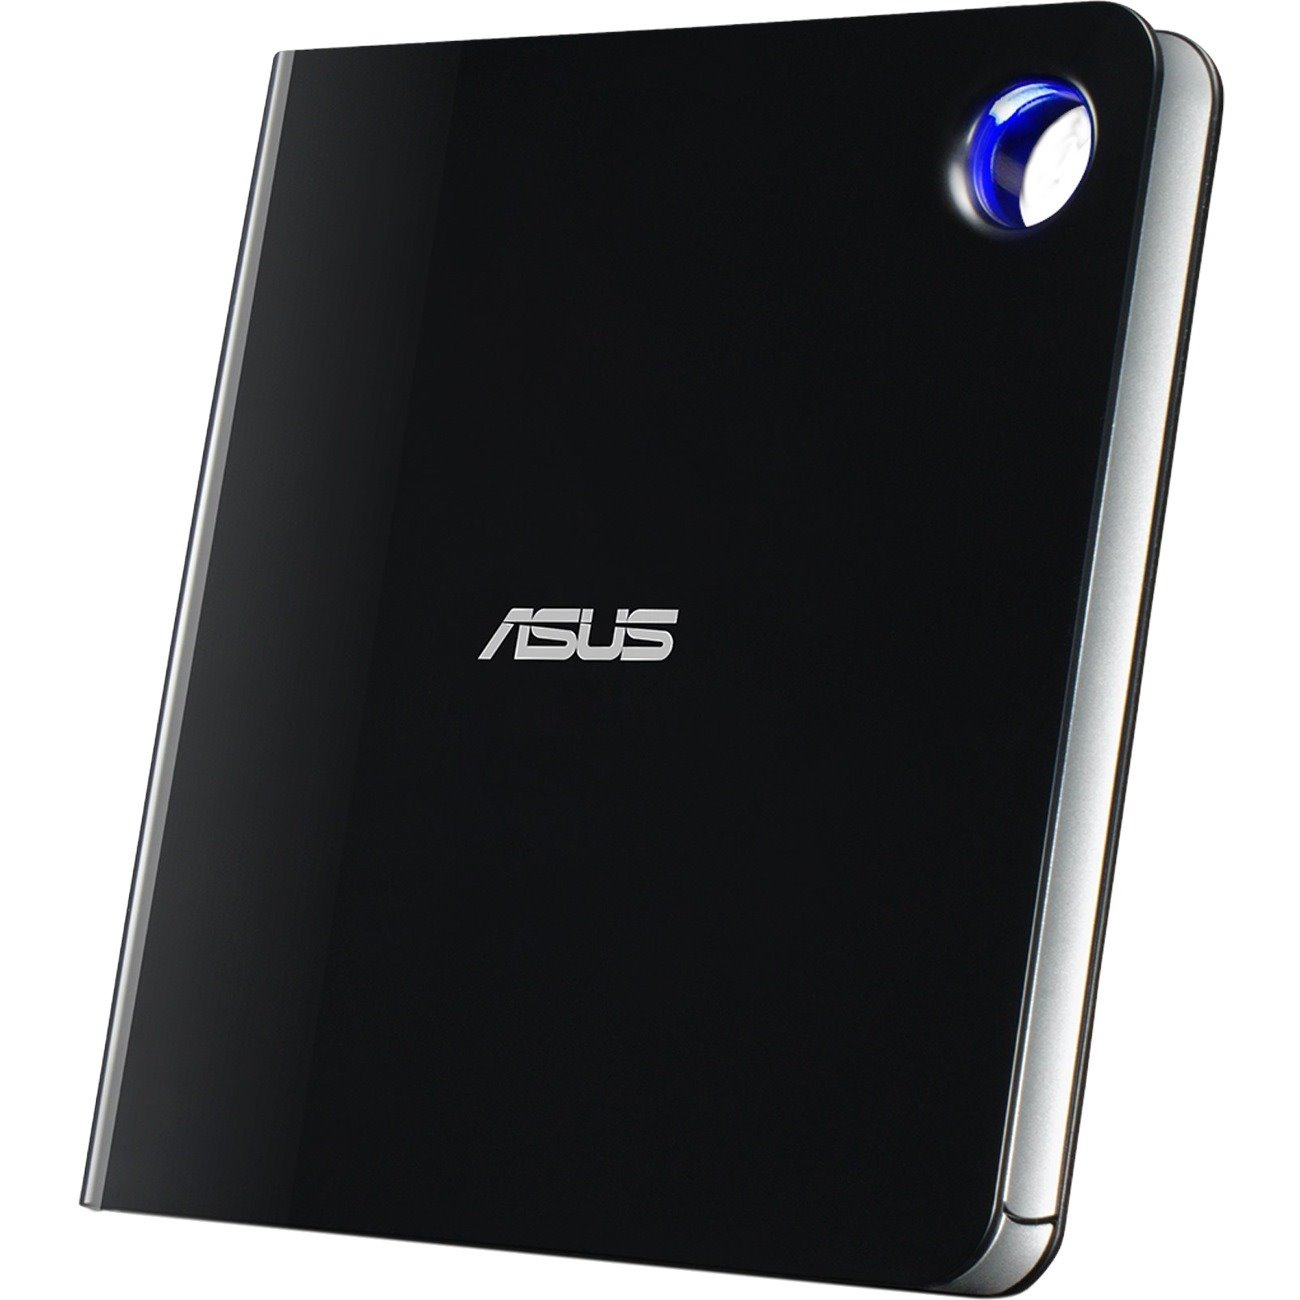 Asus SBW-06D5H-U Portable Blu-ray Writer - External - Retail Pack - Black